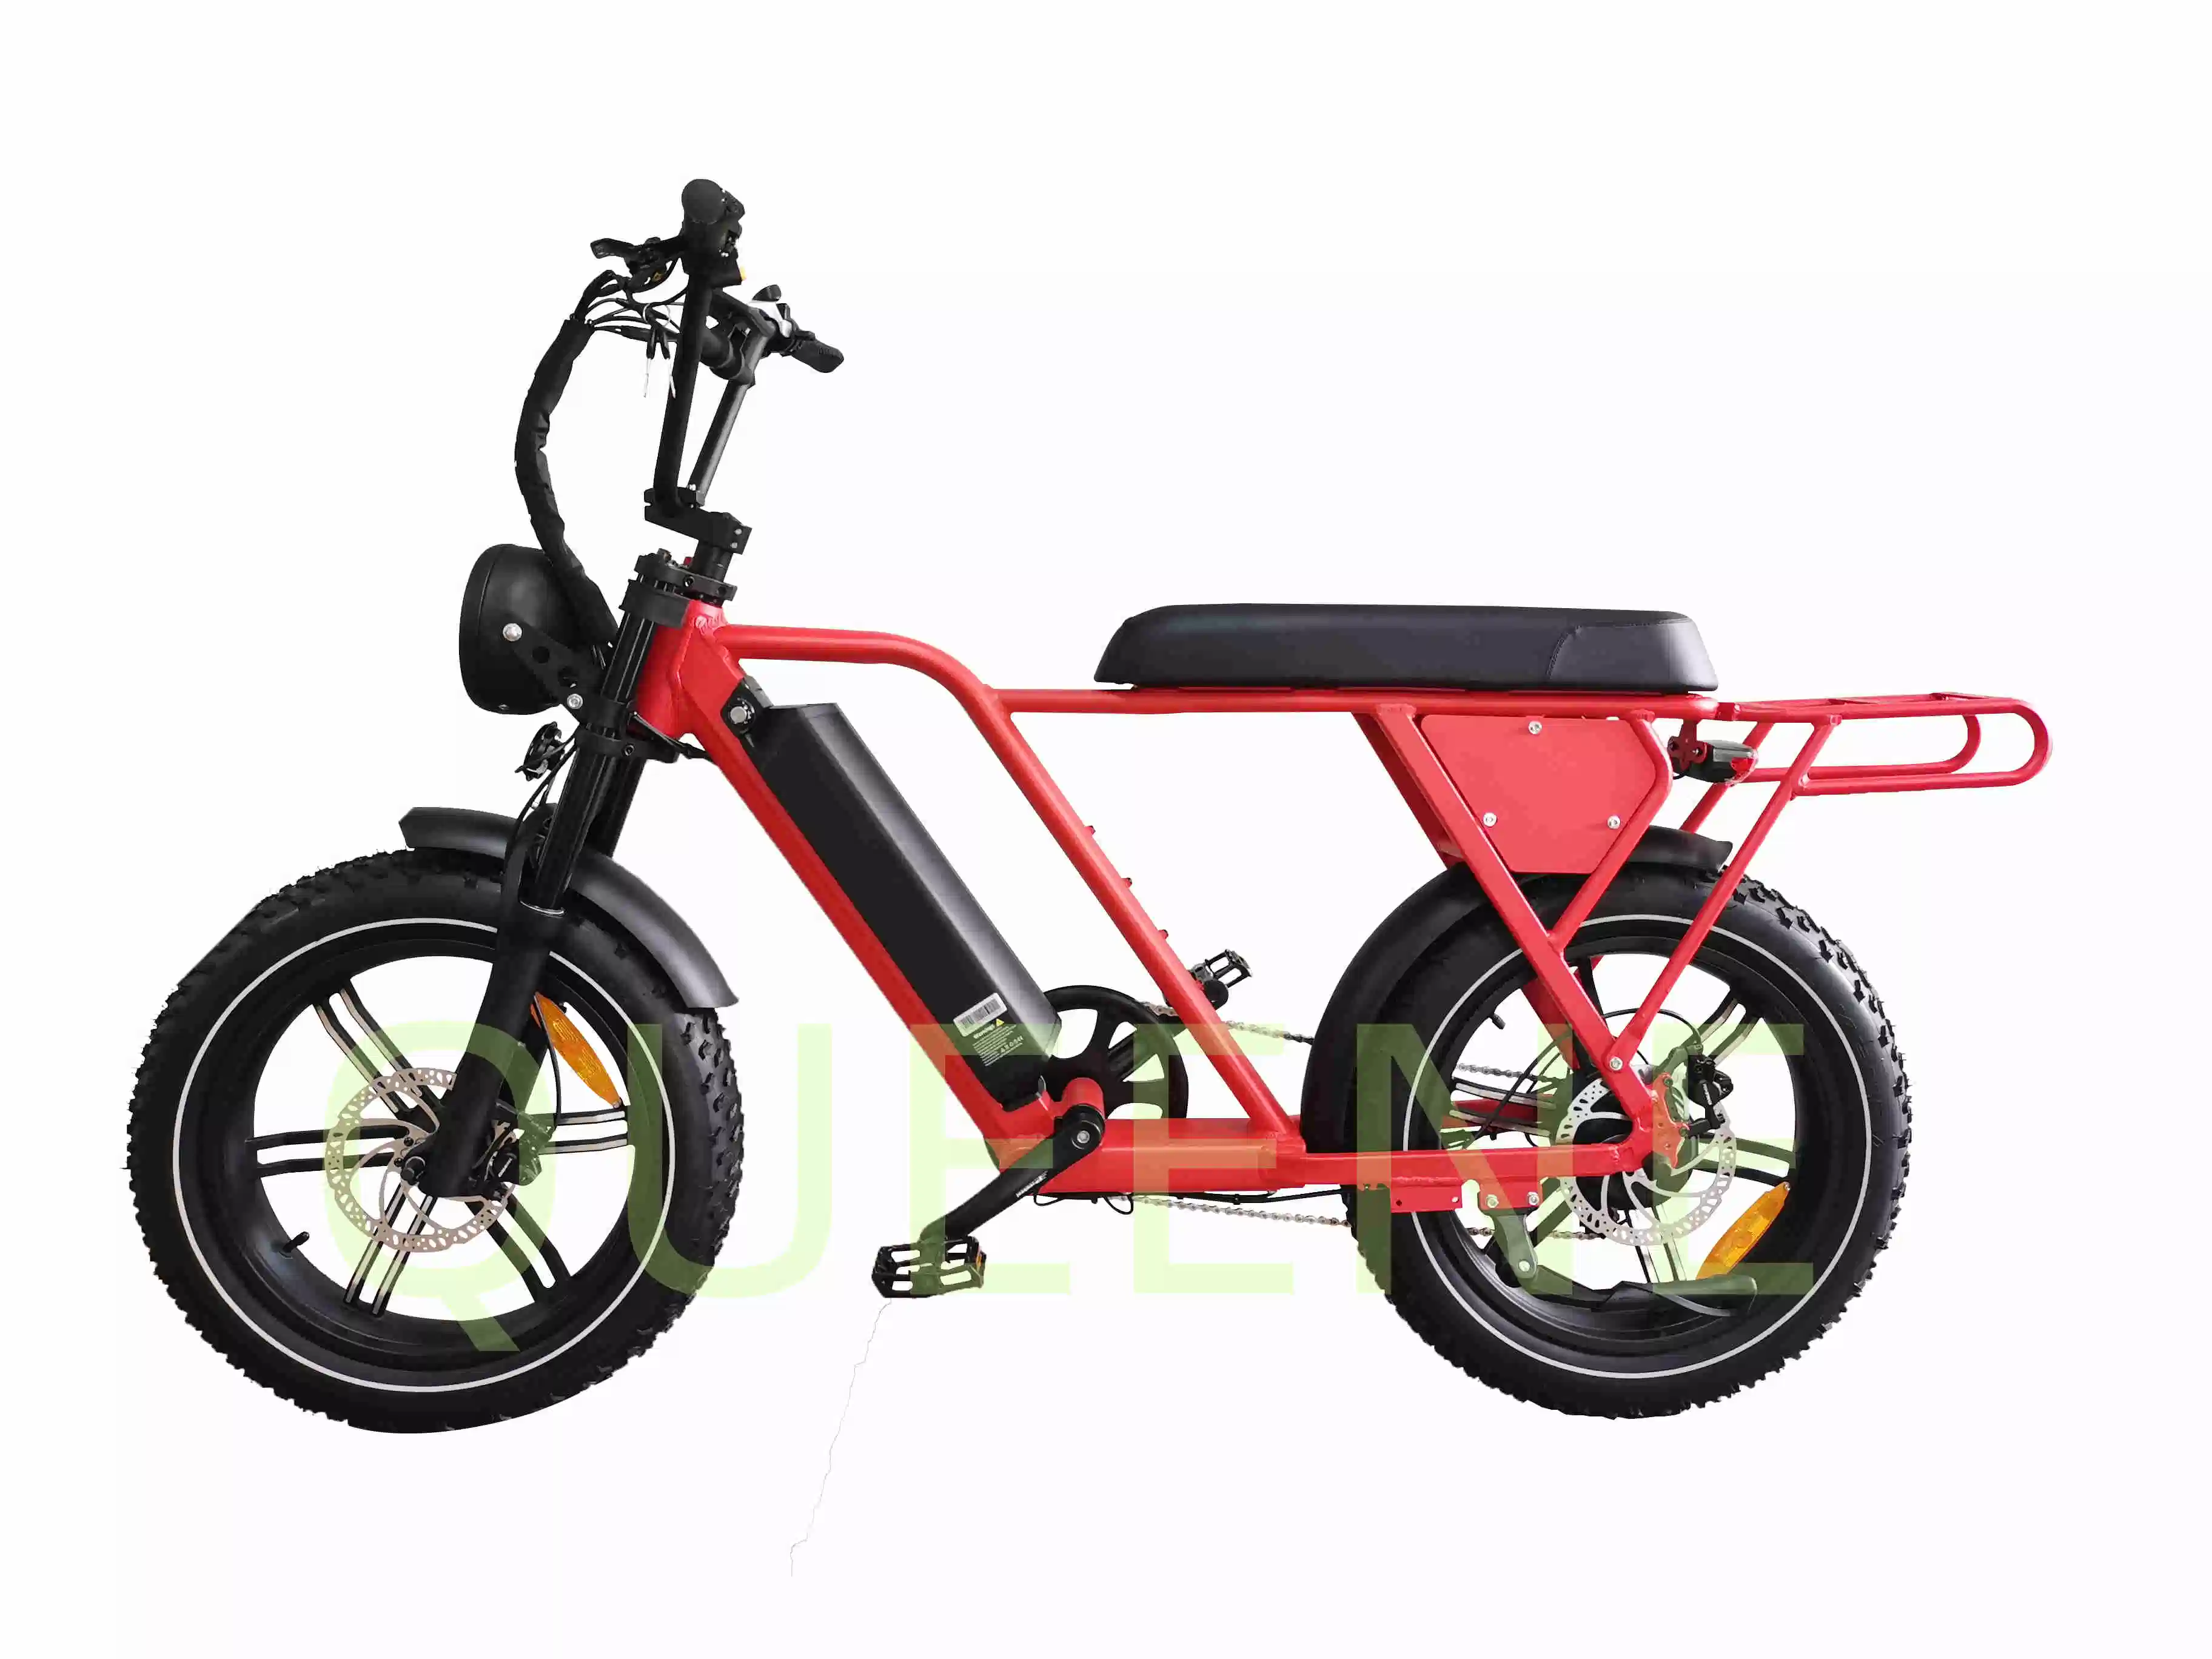 Queene/New Design 500W750W 48V Rear Hub Motor Beach 20 Inch Vintage E Bike Retro Electric Dirt Bike Fast High Speed Ebike